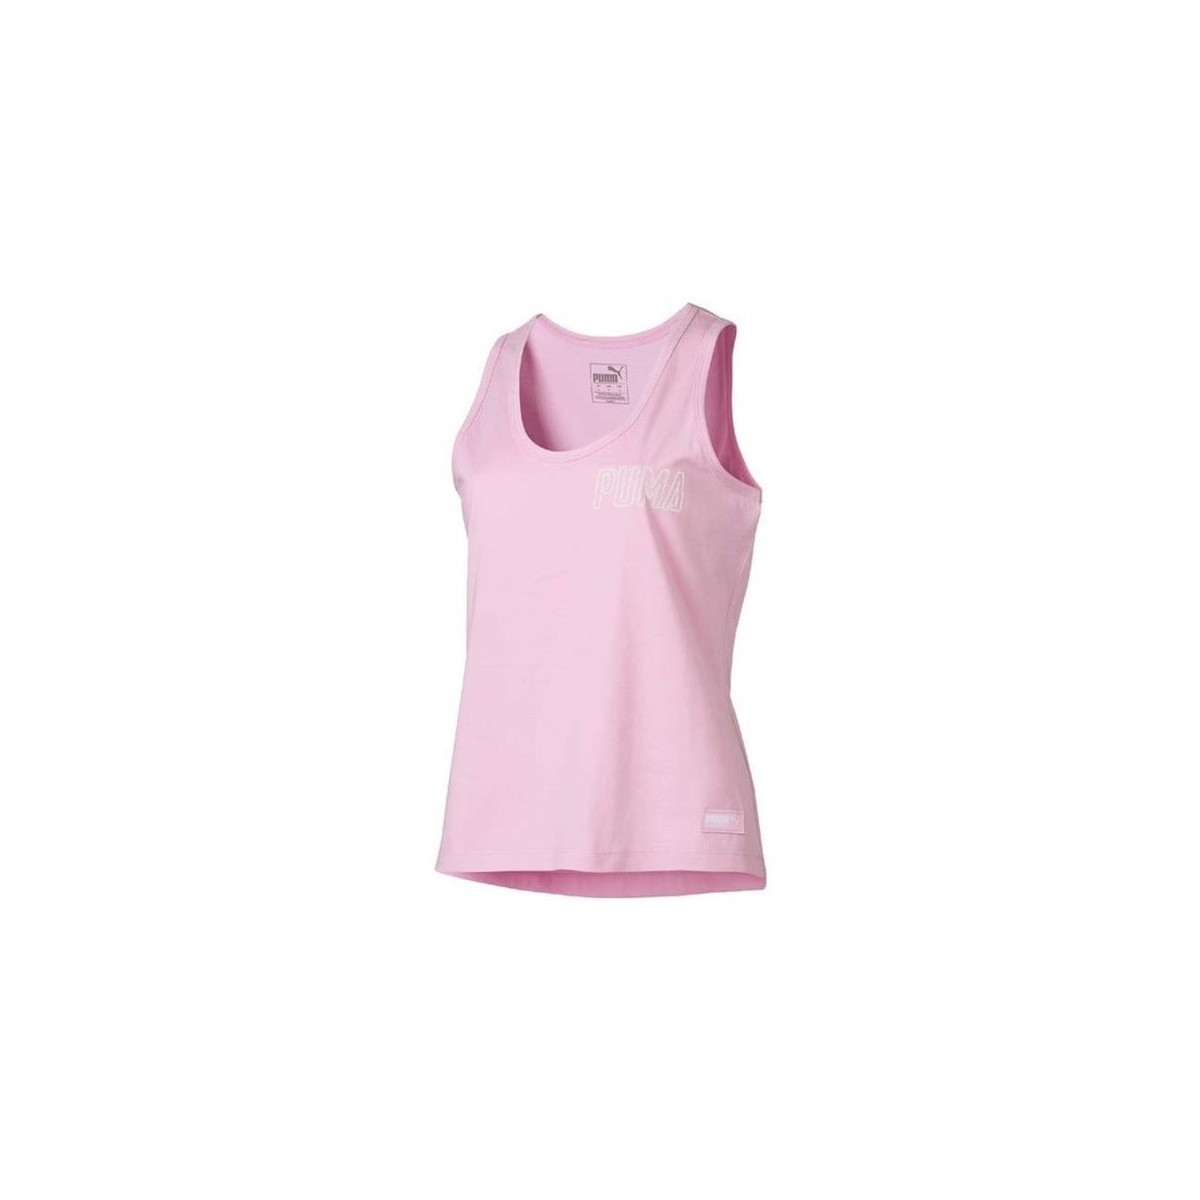 Textil Ženy Trička s krátkým rukávem Puma Athletics Tank Růžová